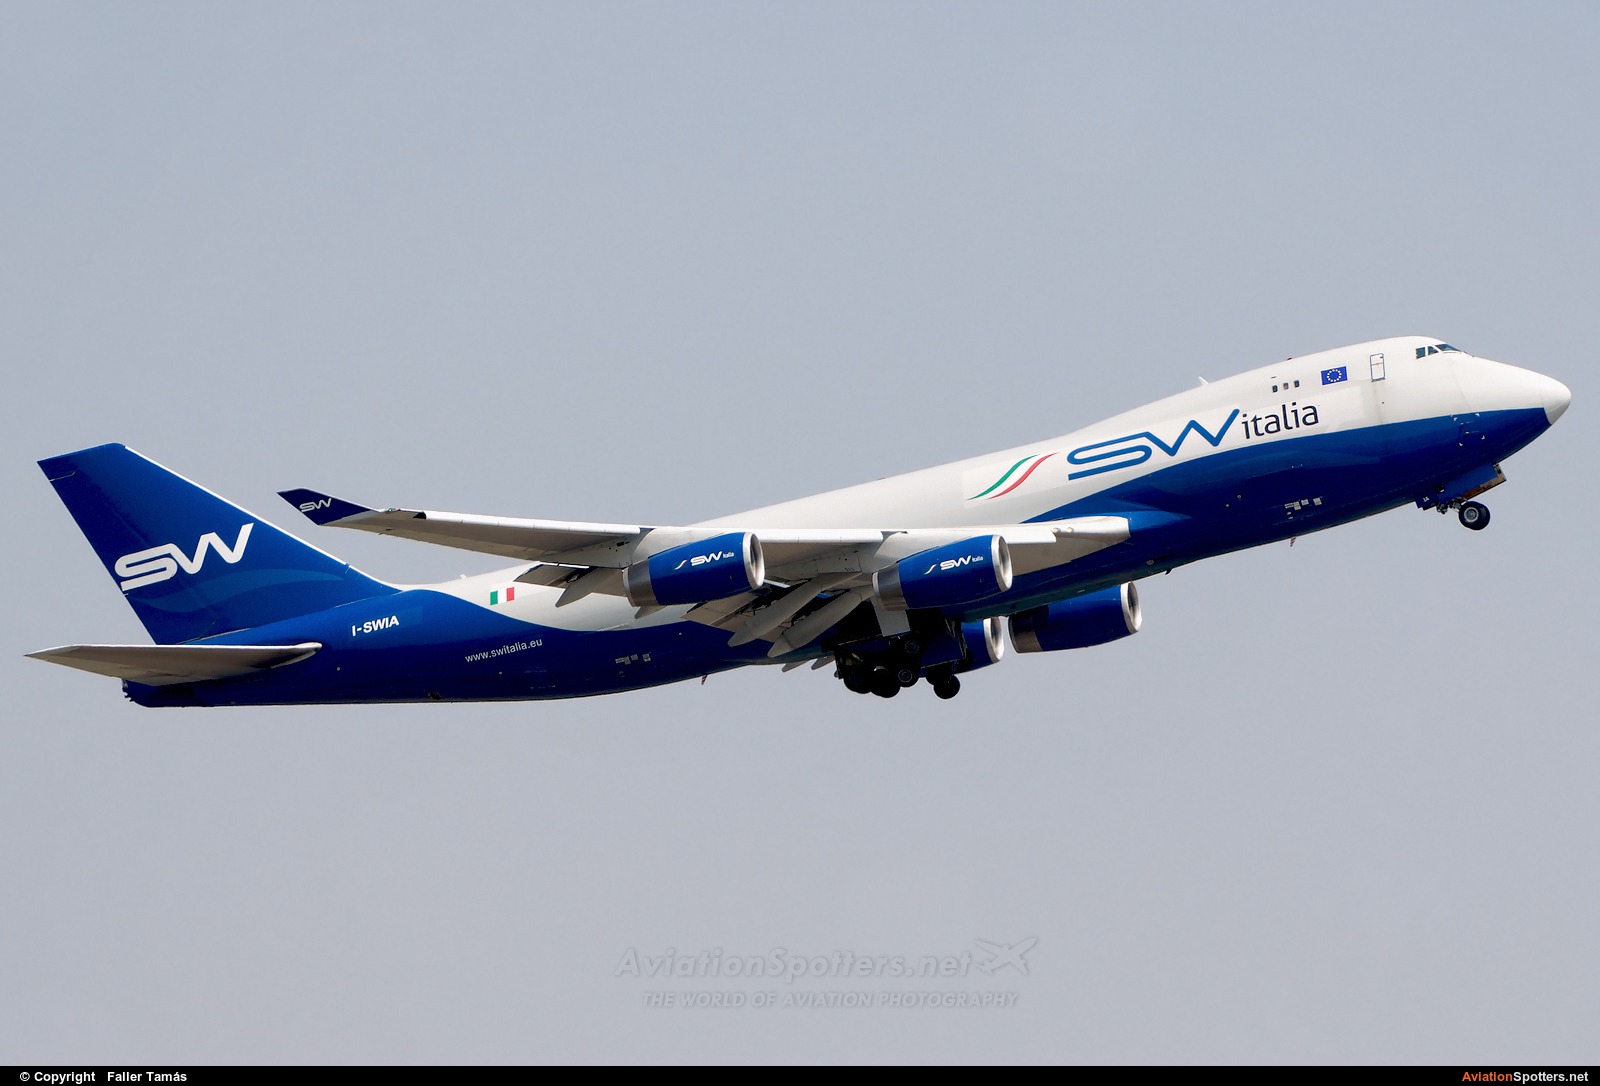 Silk Way Airlines  -  747-400  (I-SWIA) By Faller Tamás (fallto78)